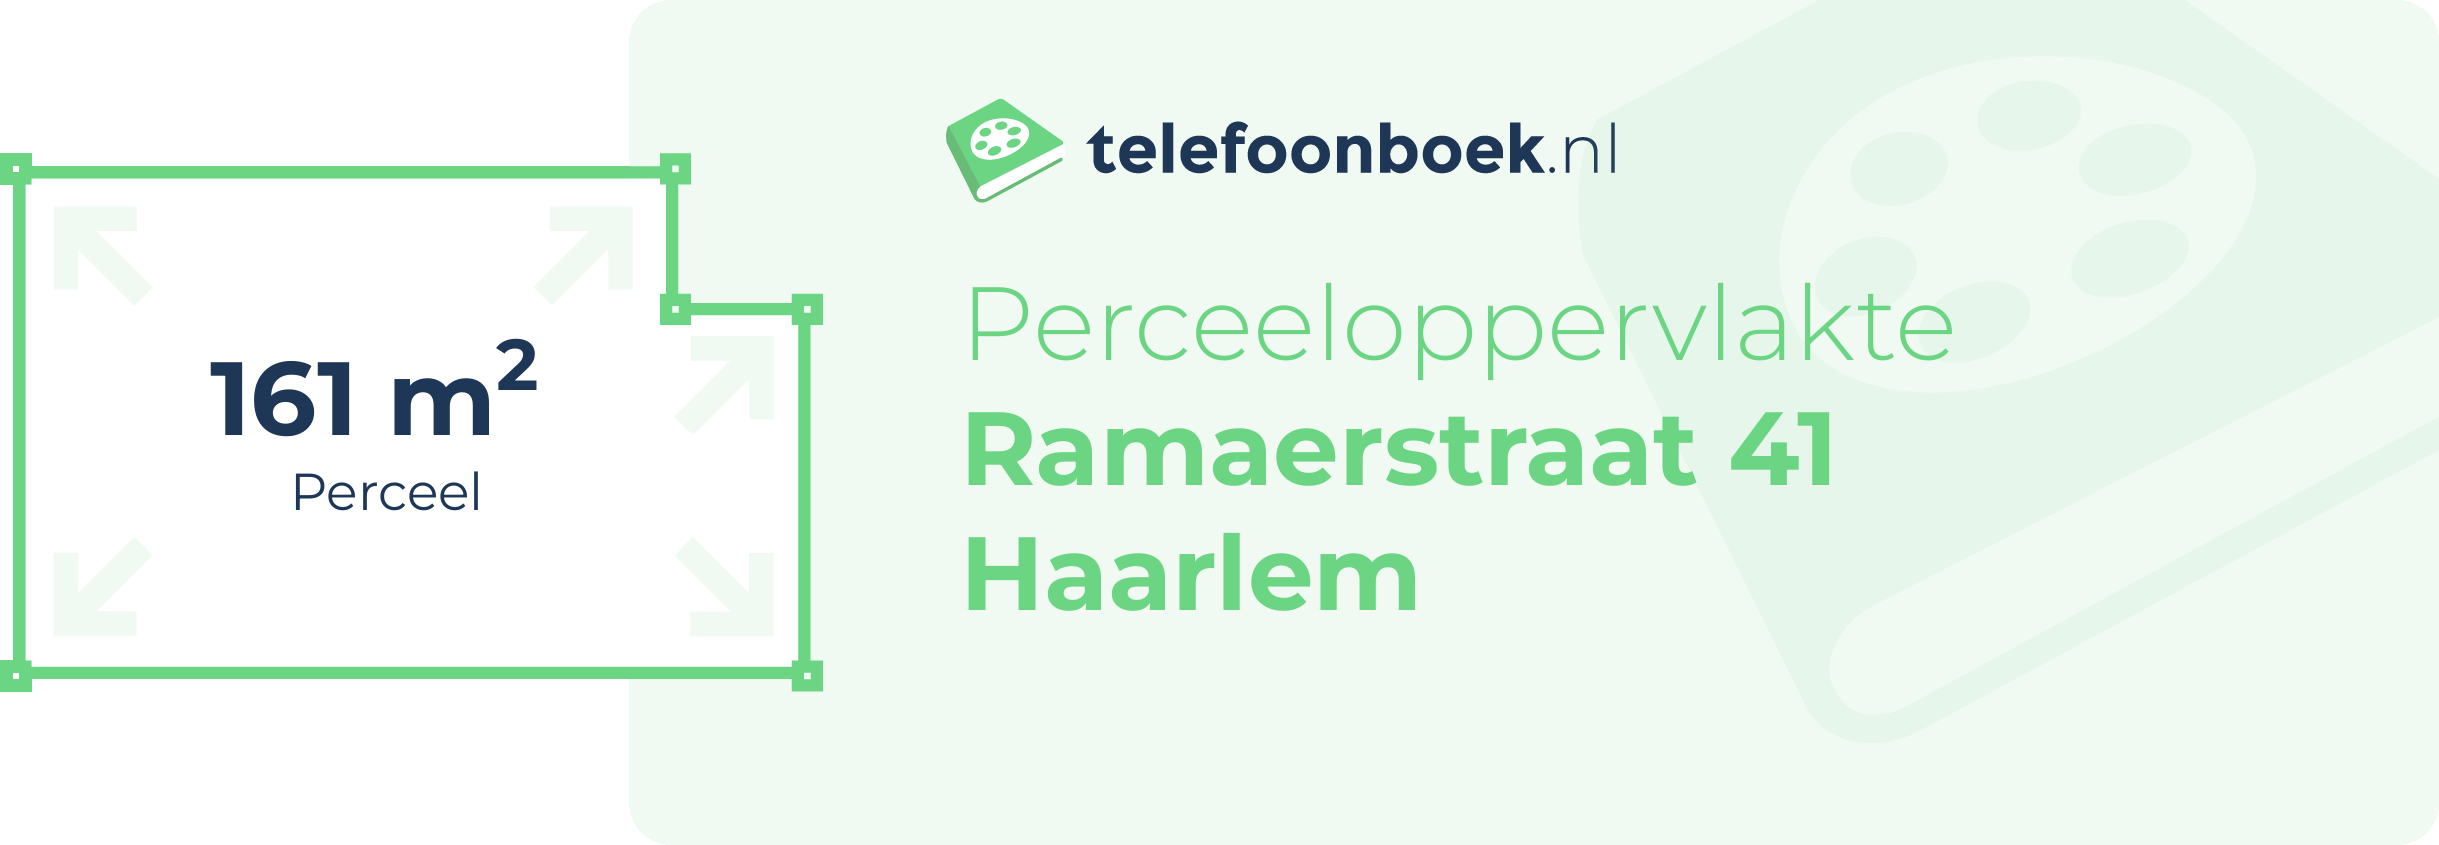 Perceeloppervlakte Ramaerstraat 41 Haarlem